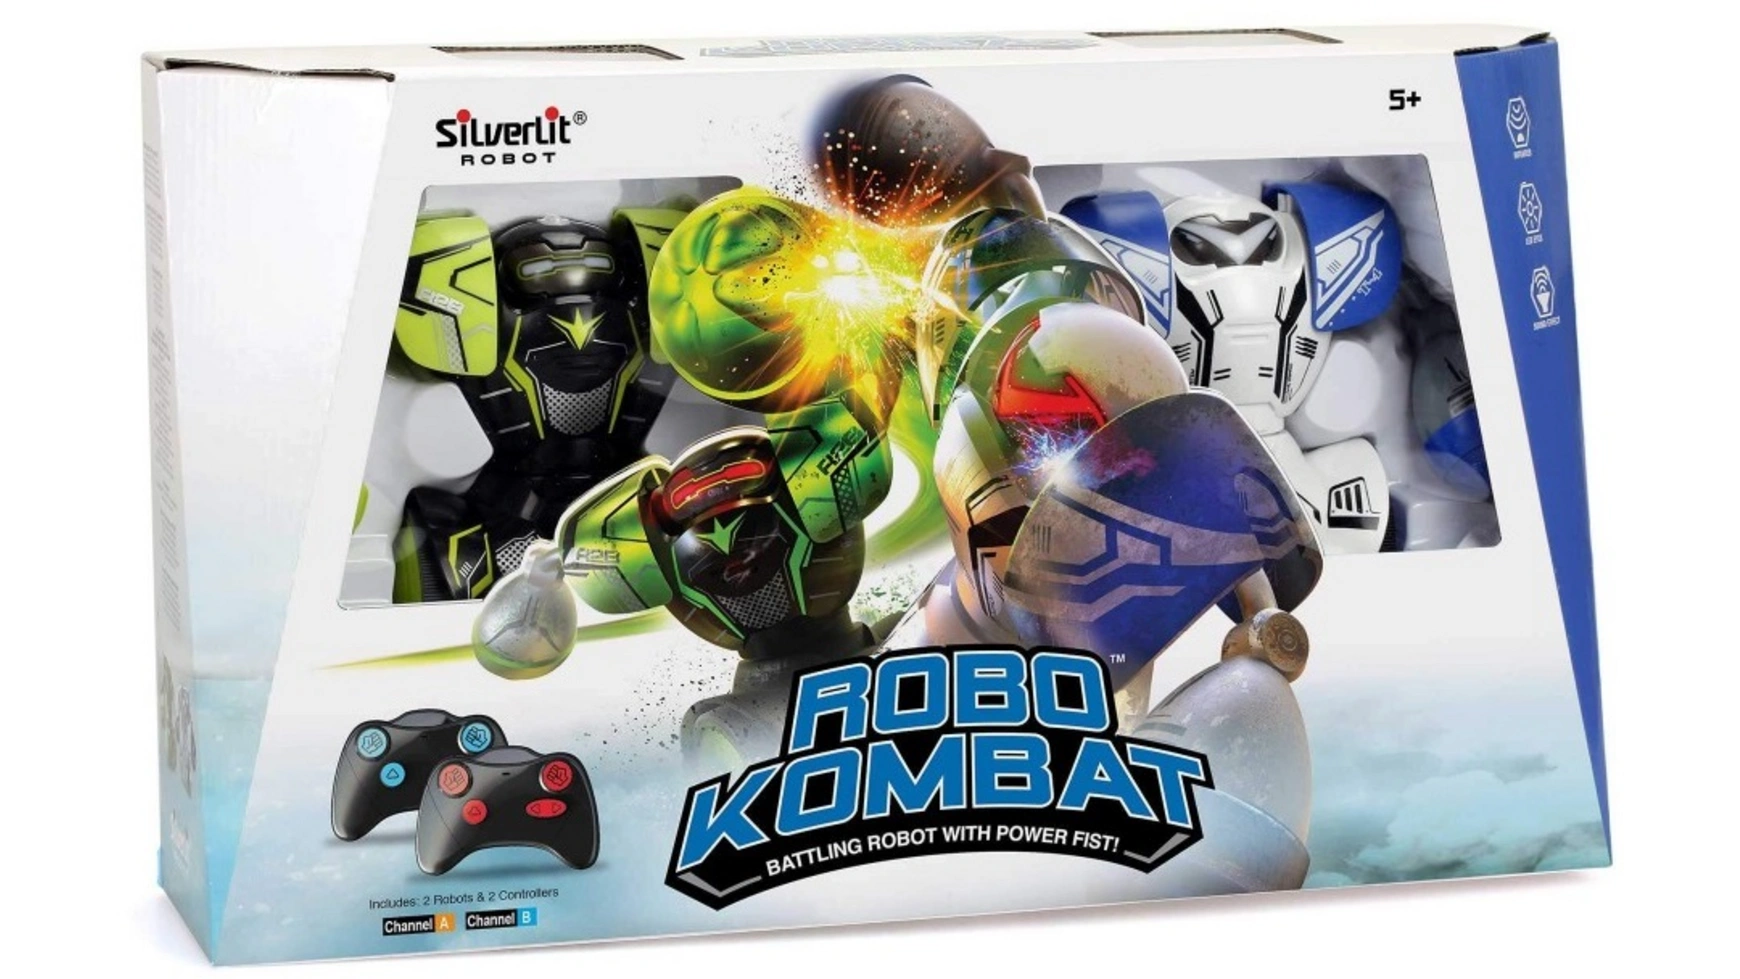 Silverlit робот для кулачного боя Robo Kombat